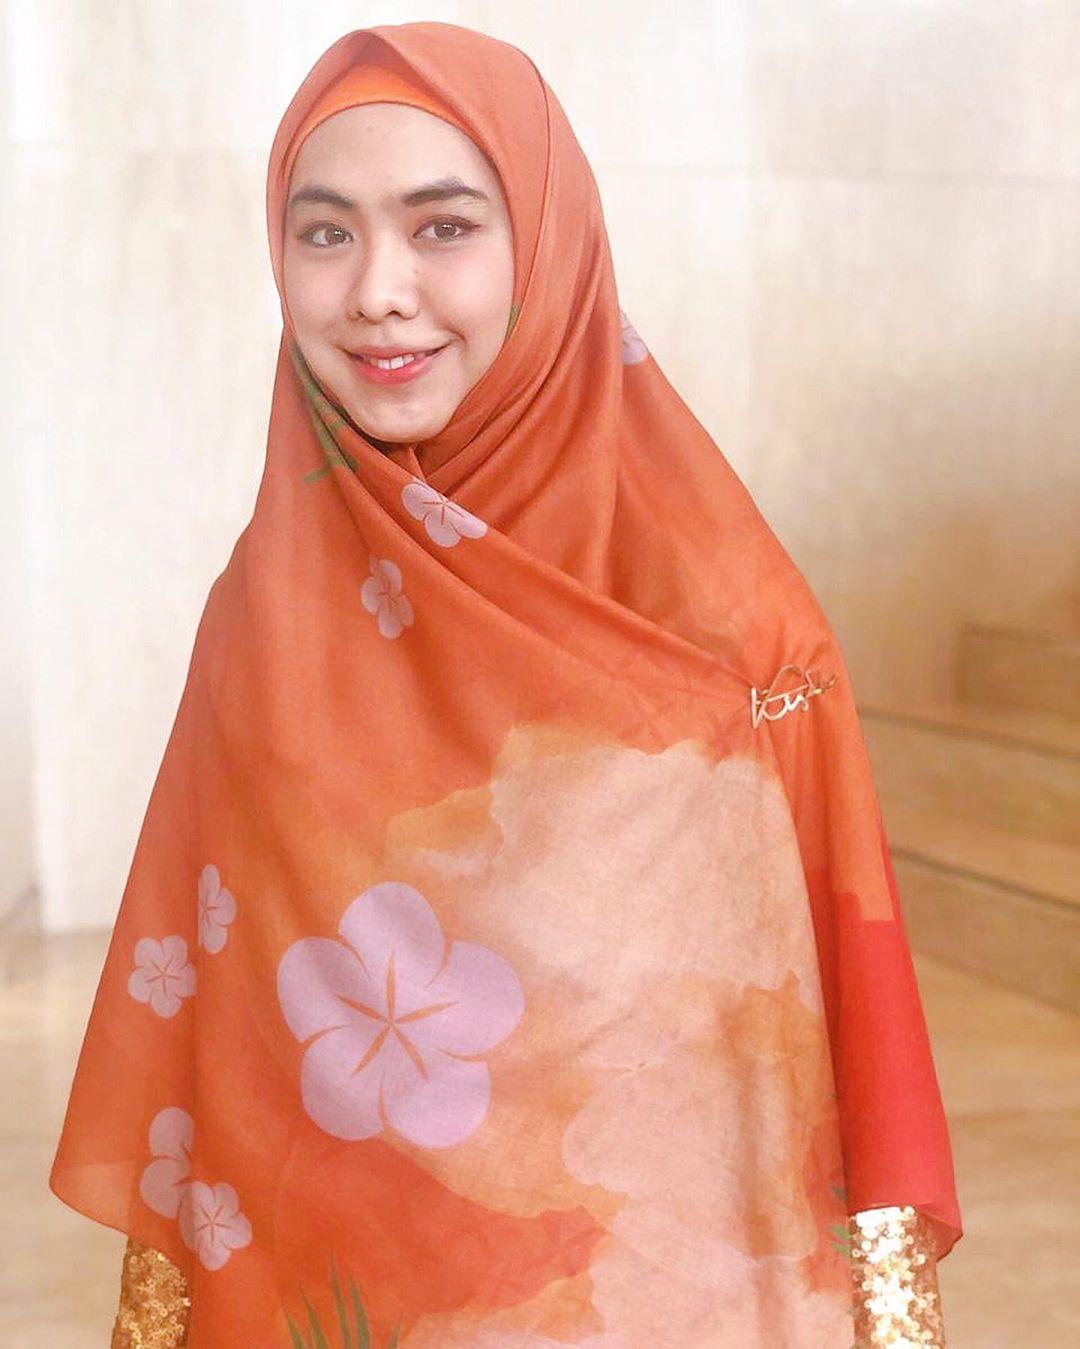 Tanpa Pacaran, 10 Seleb Hijab Ini Nikah Melalui Taaruf Singkat